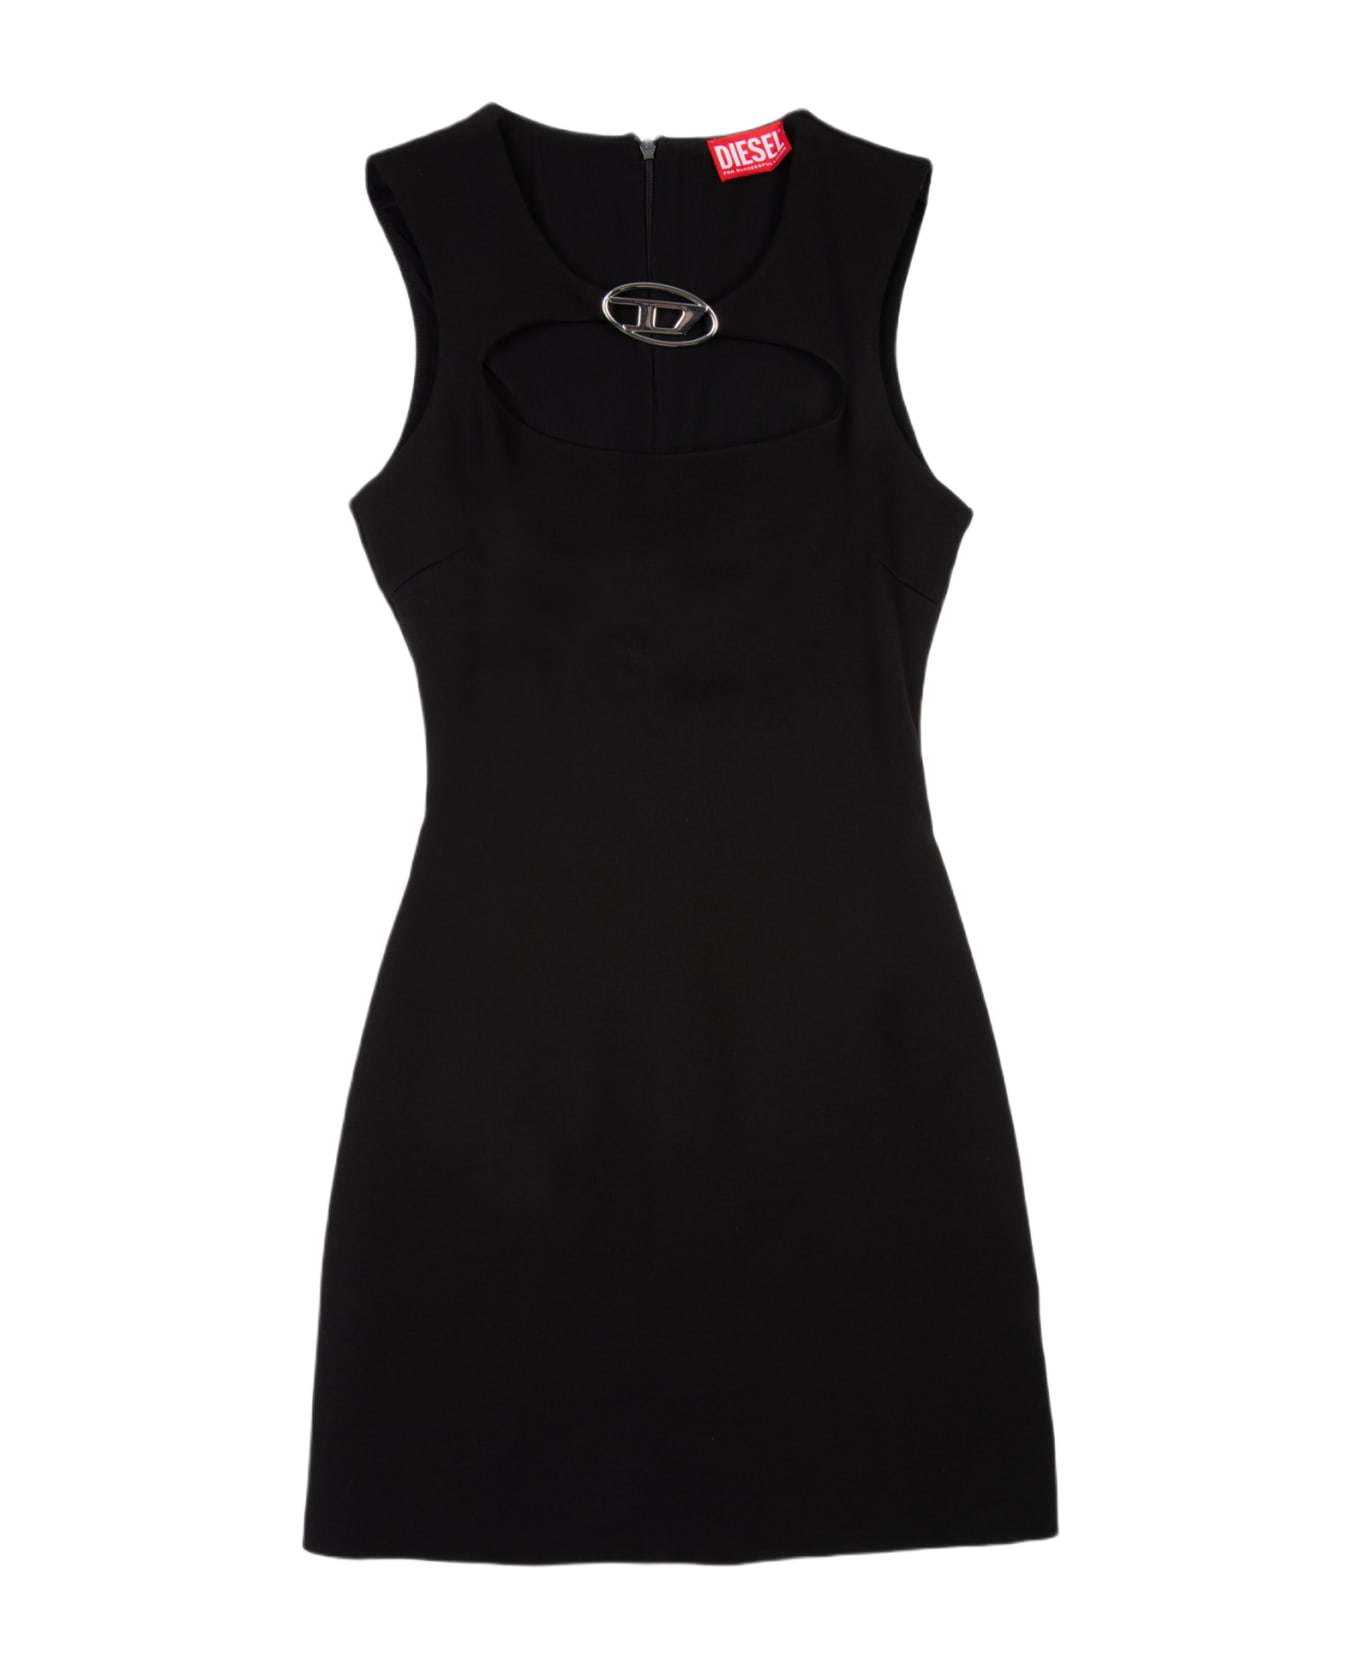 Diesel D-reams Black short sleveless dress with Oval D logo - D Reams - Nero